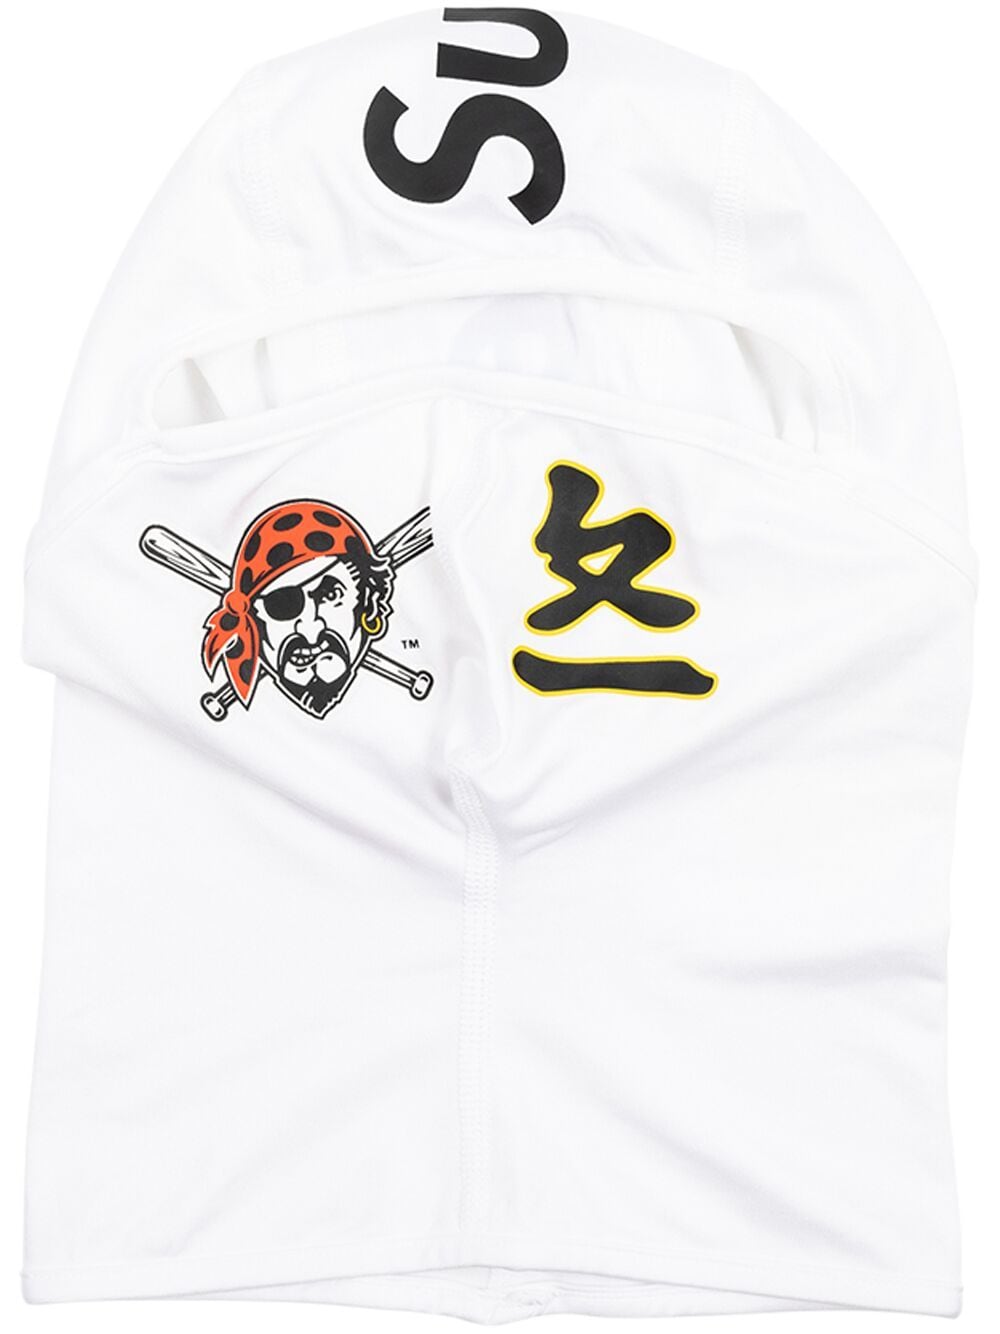 Supreme x MLB Kanji Teams "Pittsburgh Pirates - White" lightweight balaclava